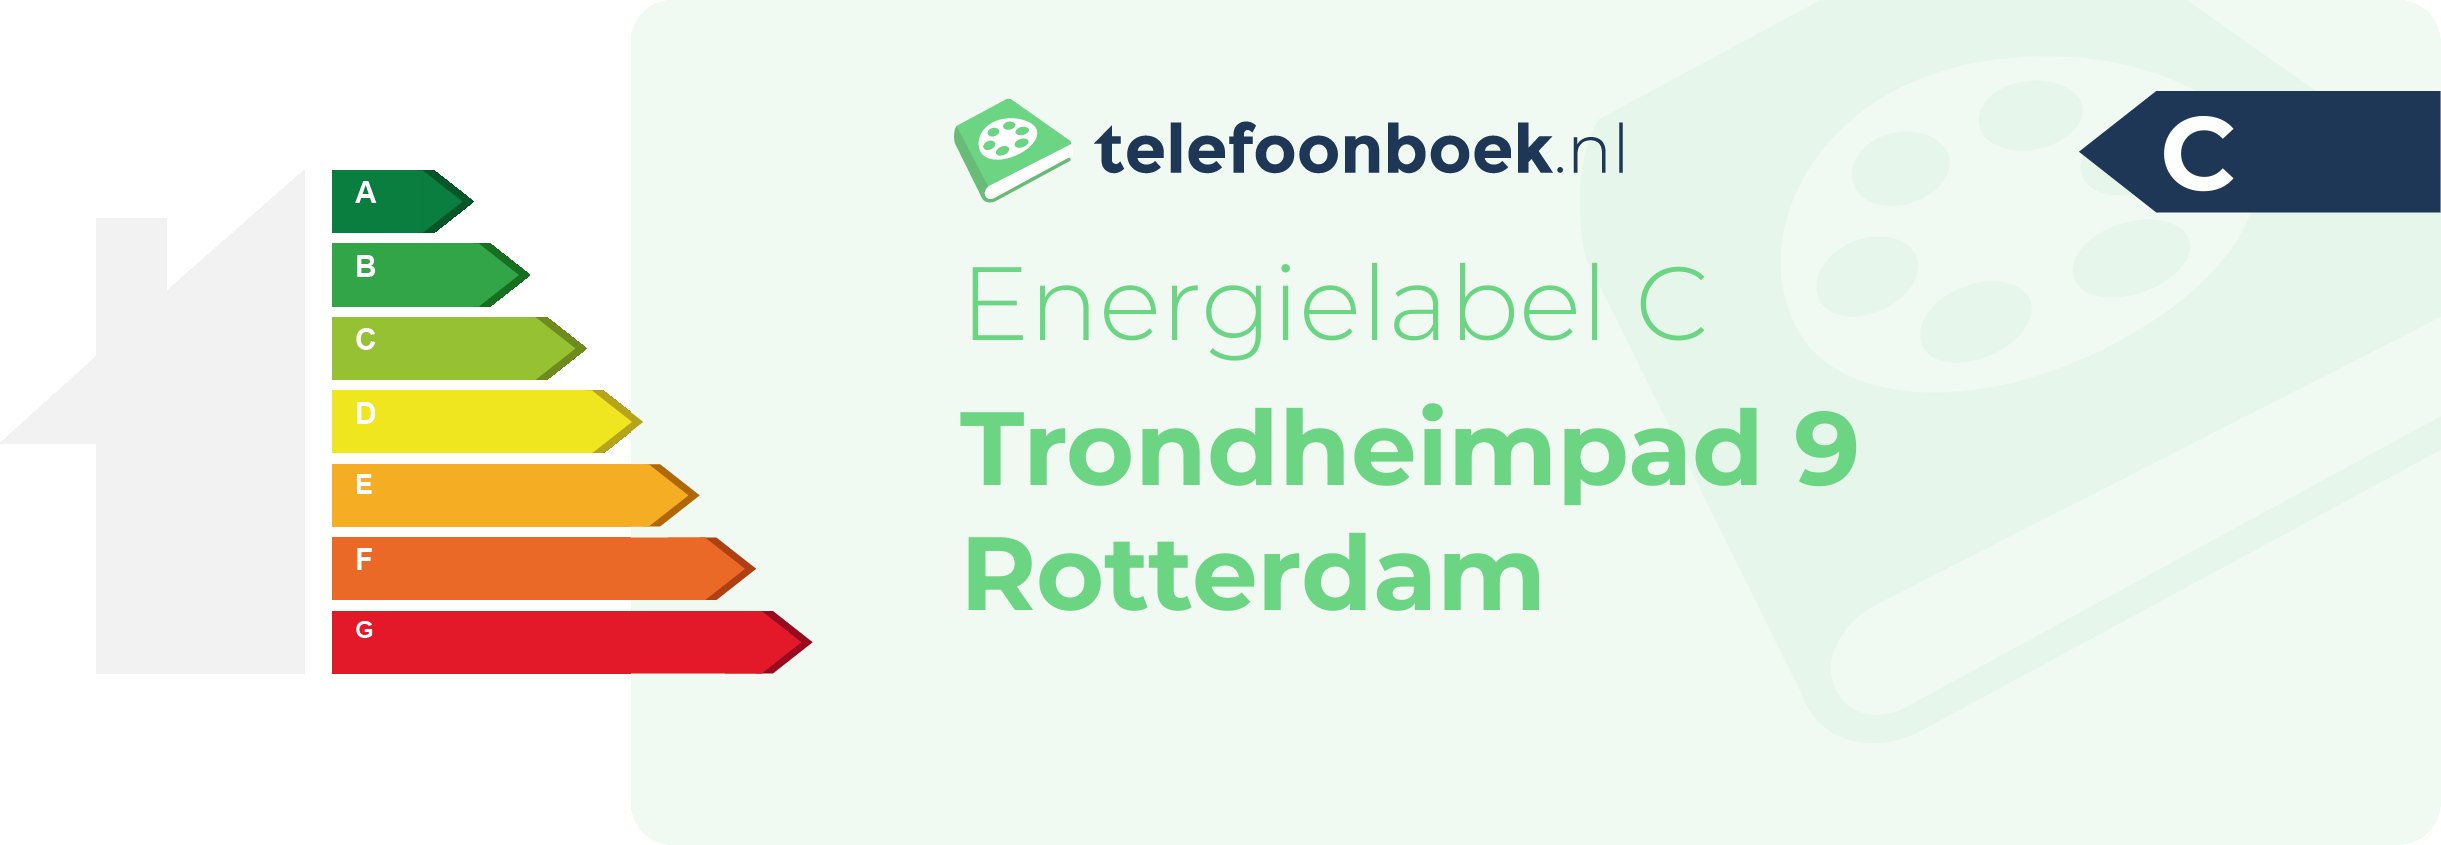 Energielabel Trondheimpad 9 Rotterdam